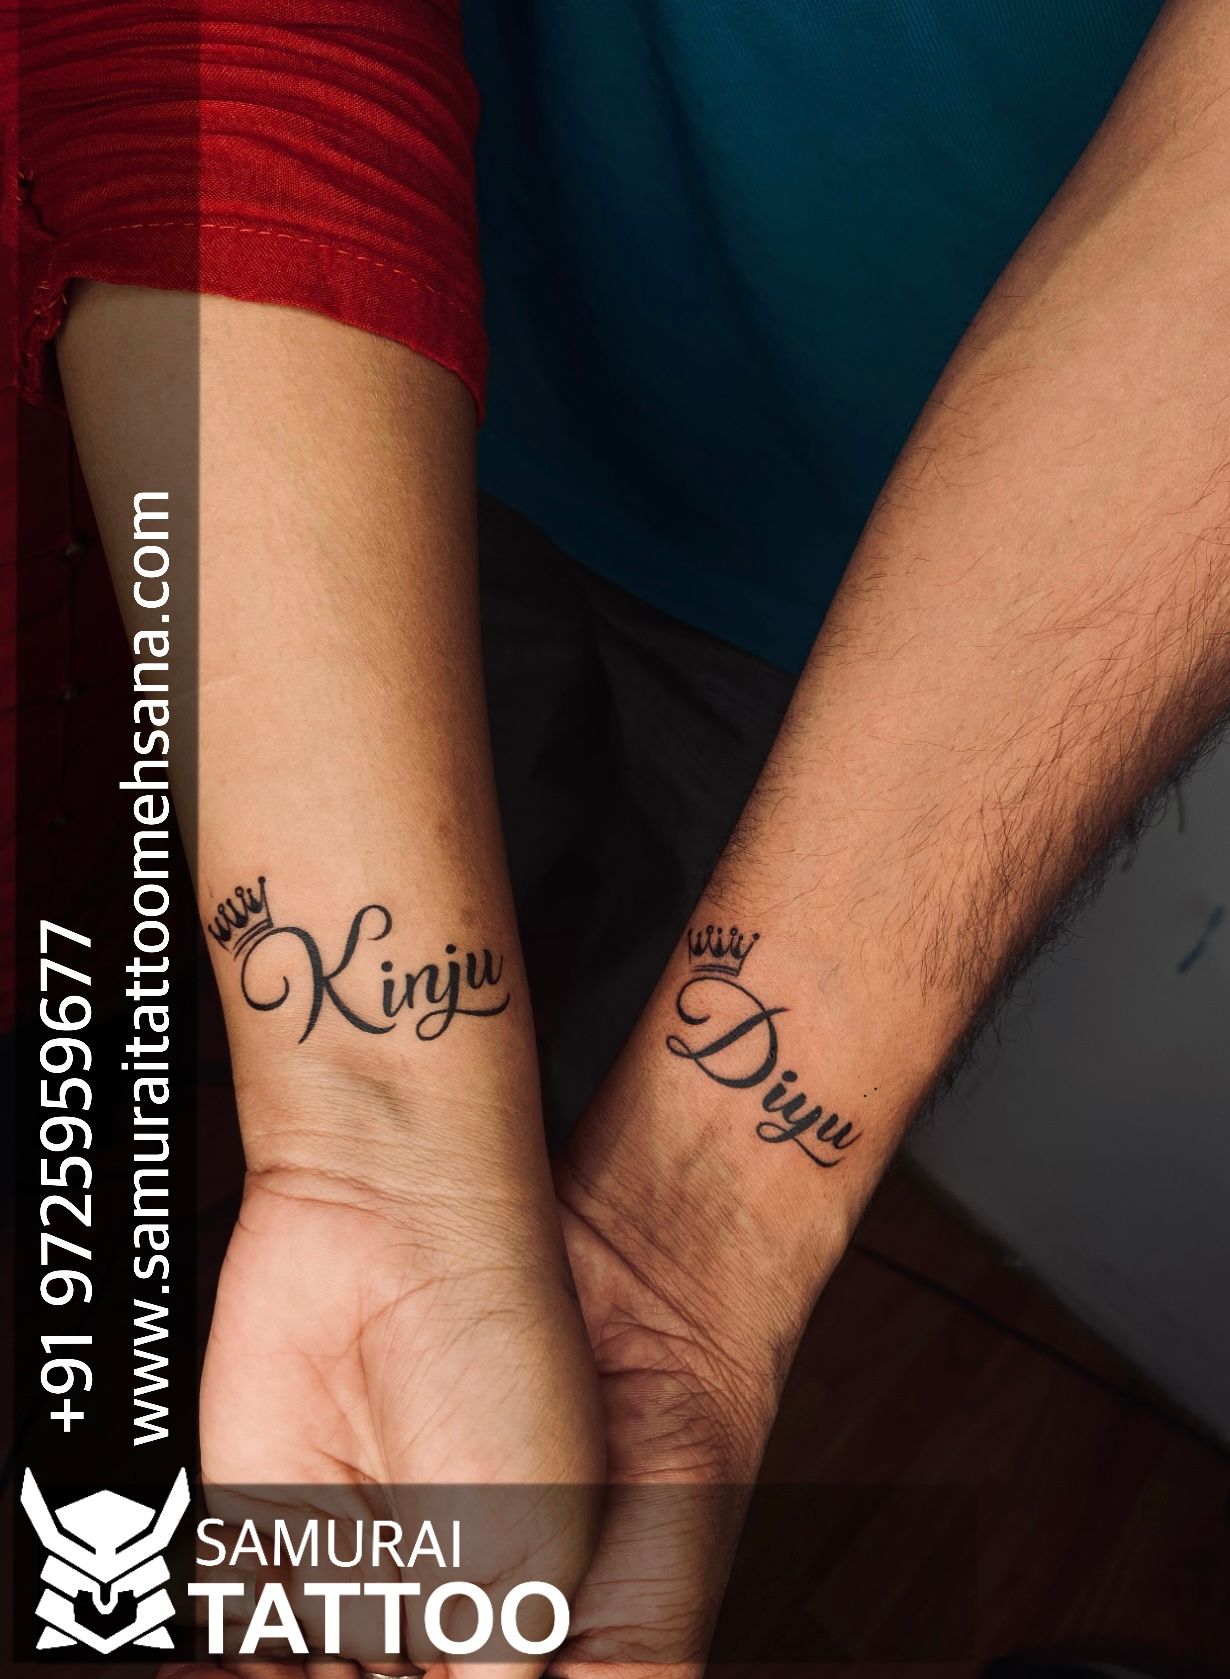 Crazy Ink Tattoo & Body Piercing Raipur - Key tattoo design by artist raju  sahu done crazy ink tattoo studio raipur. Call for appointment :-7828251881  8818881786 #keytattoo #raipurartist #besttattoo #nametattoo #wristtattoo  #tattooforgirl #